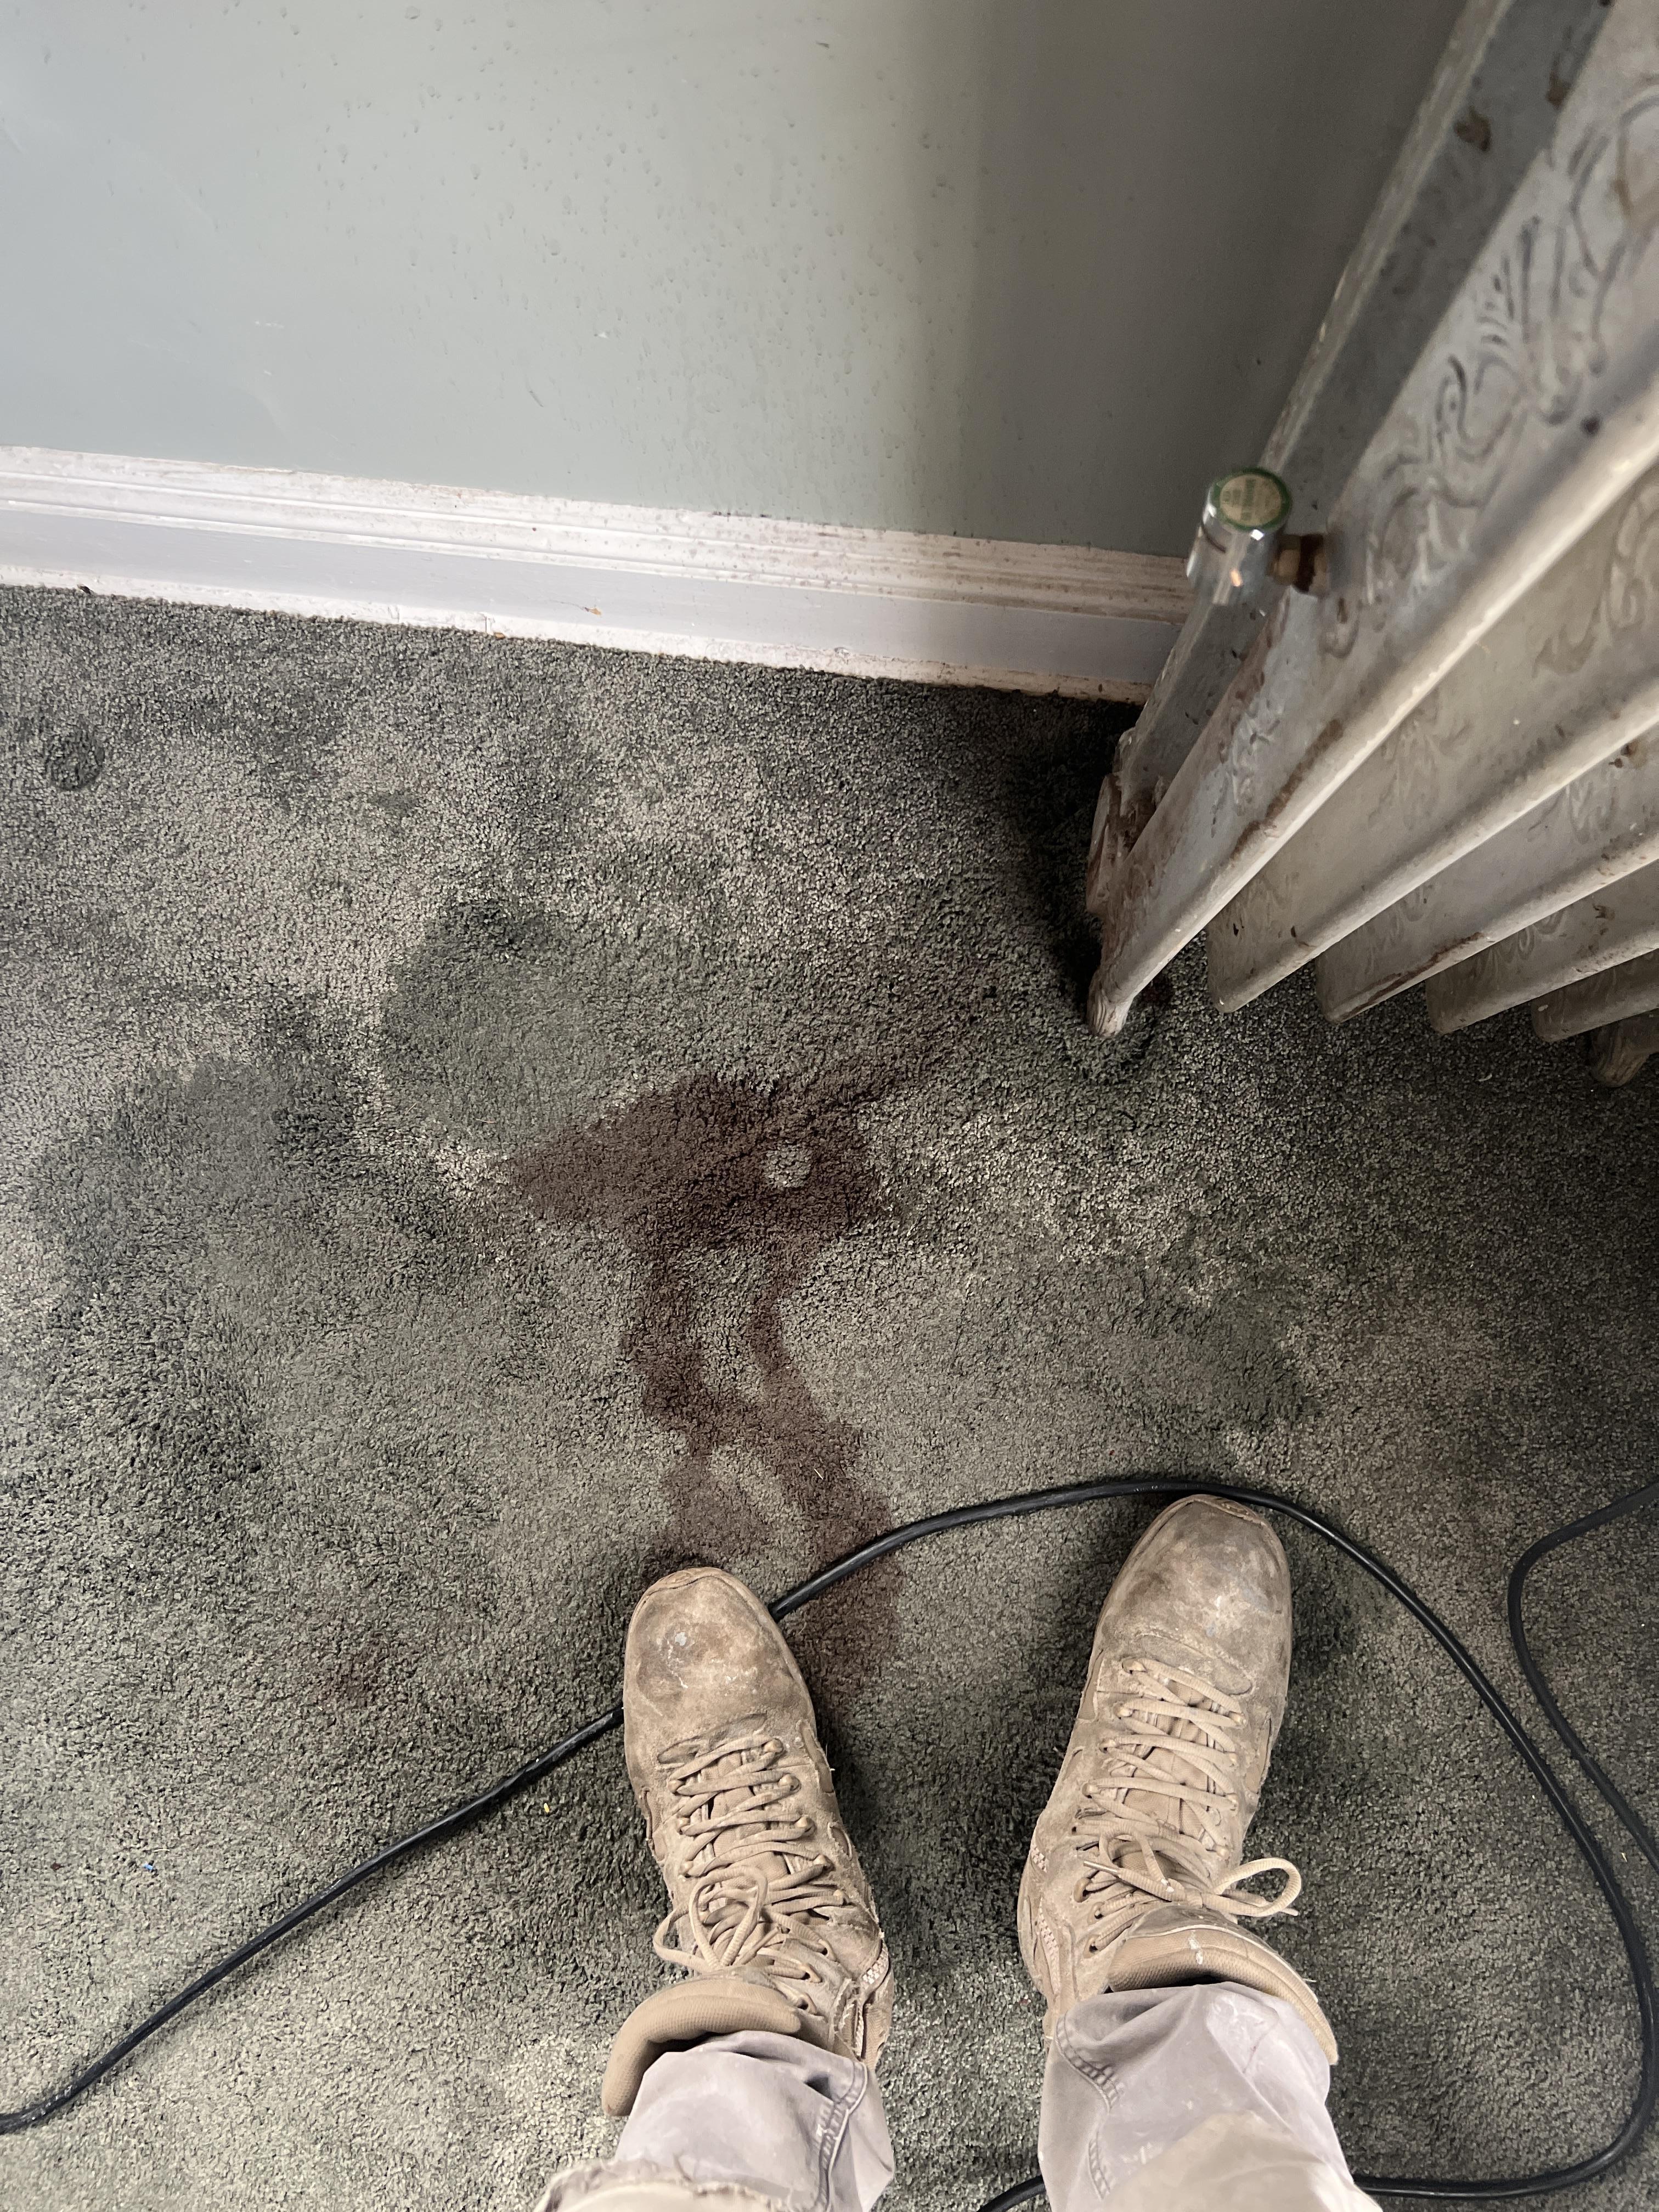 Saturated Carpet from Burst Radiator Line